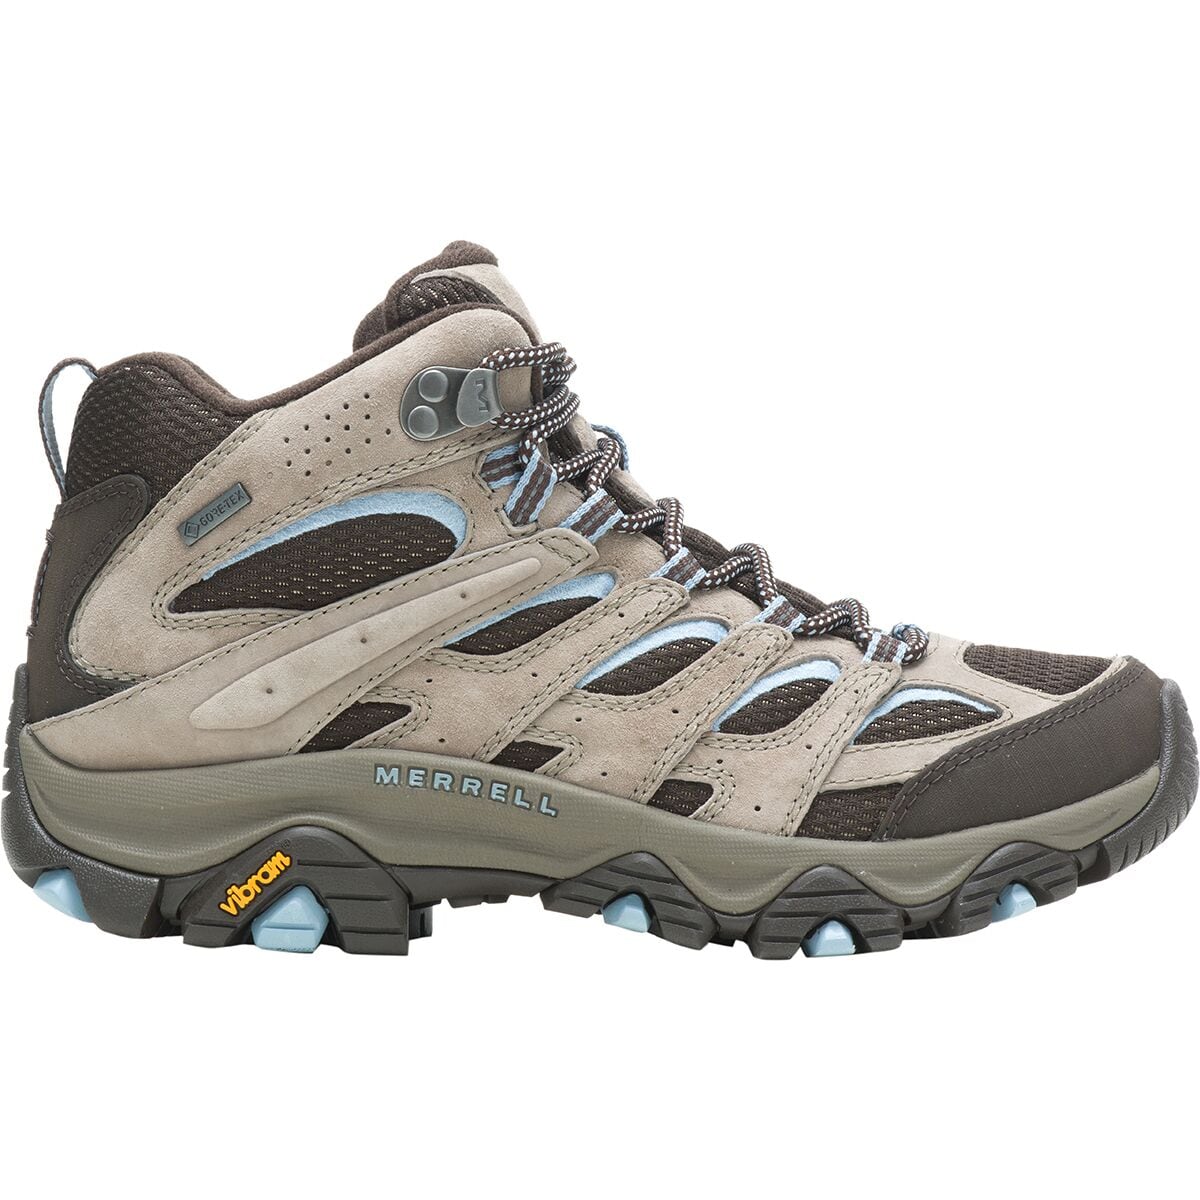 Merrell Moab 3 Mid GTX Hiking Boot - Women's - Footwear